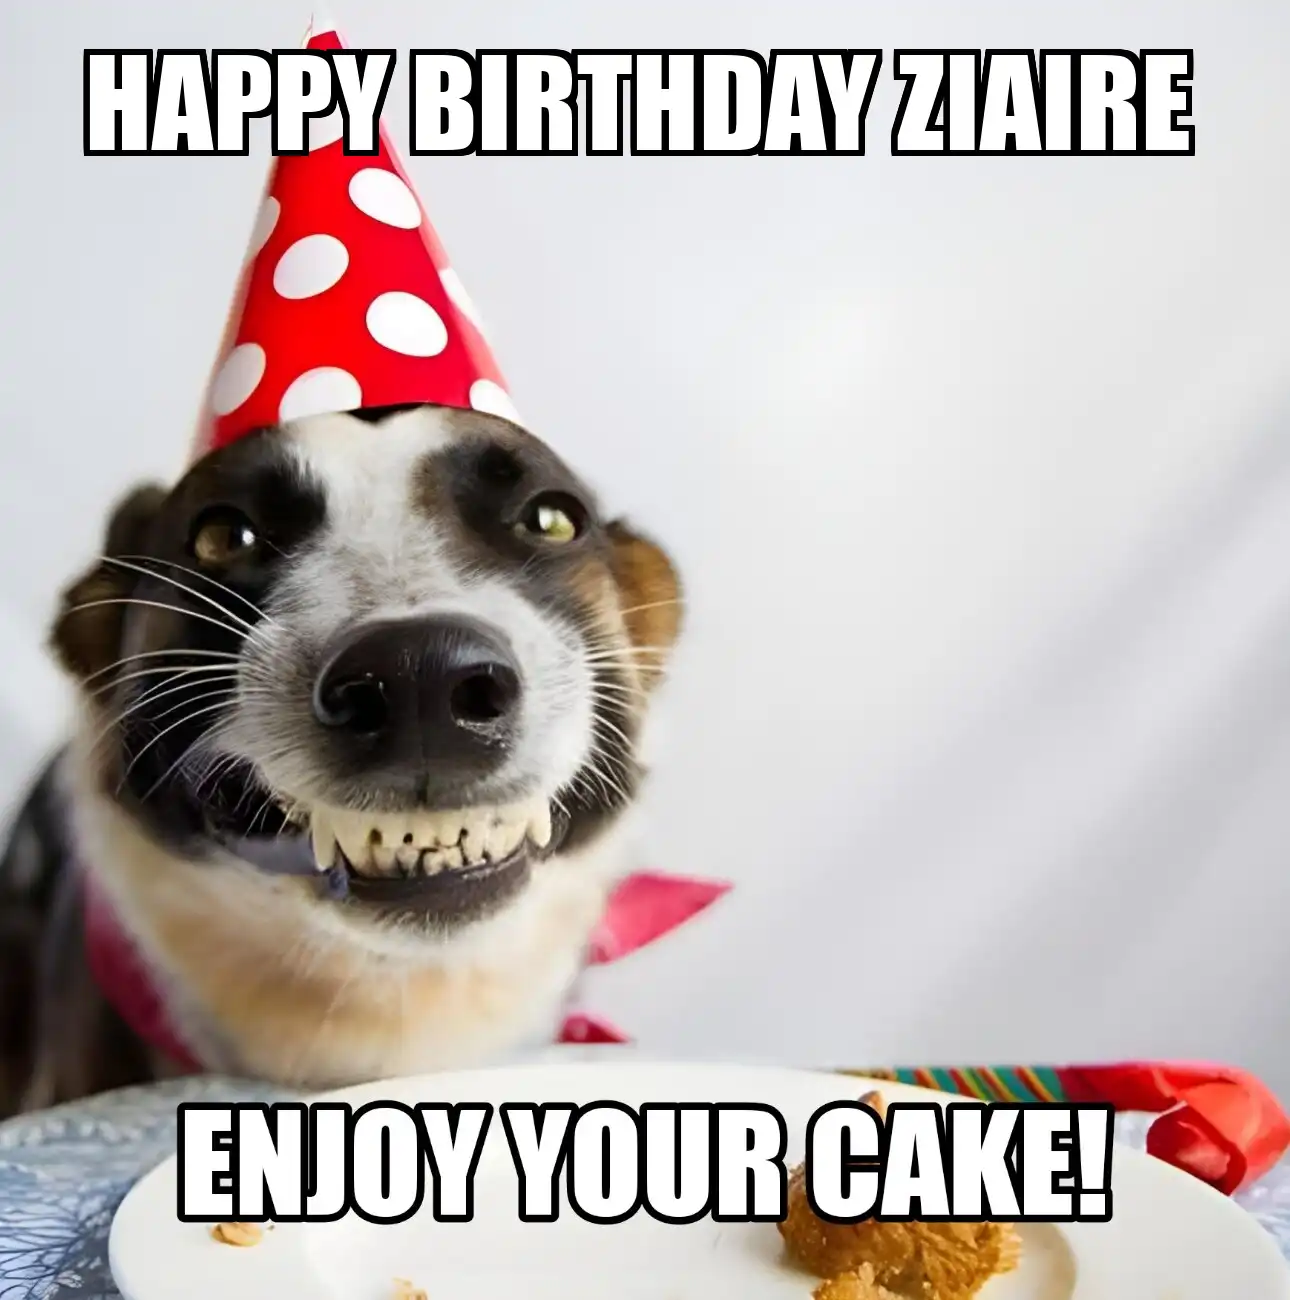 Happy Birthday Ziaire Enjoy Your Cake Dog Meme